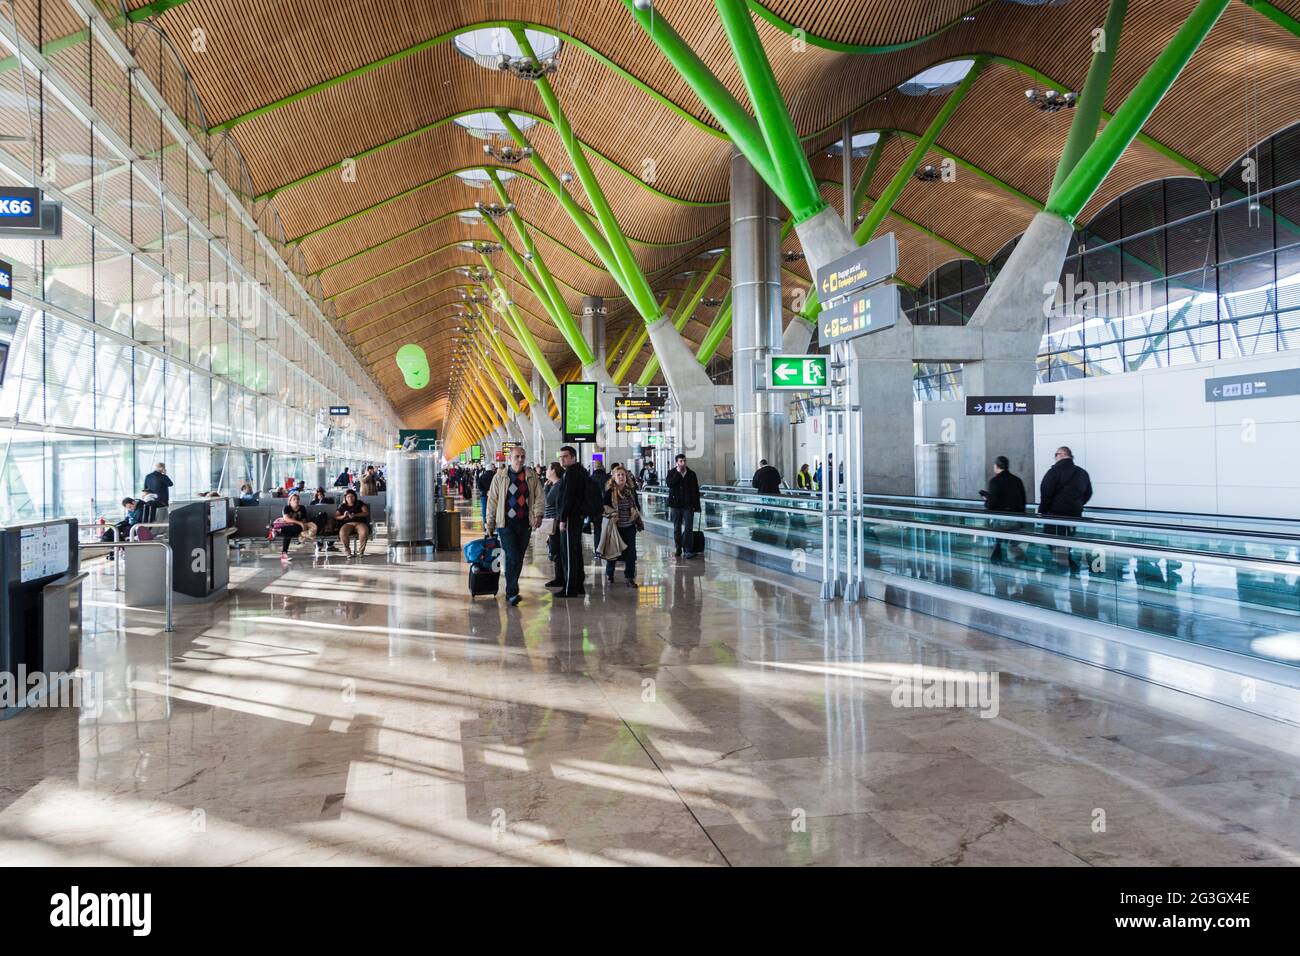 MADRID, SPAGNA - 26 GENNAIO 2015: Interno di un terminal dell'aeroporto Adolfo Suarez Madrid-Barajas. Foto Stock